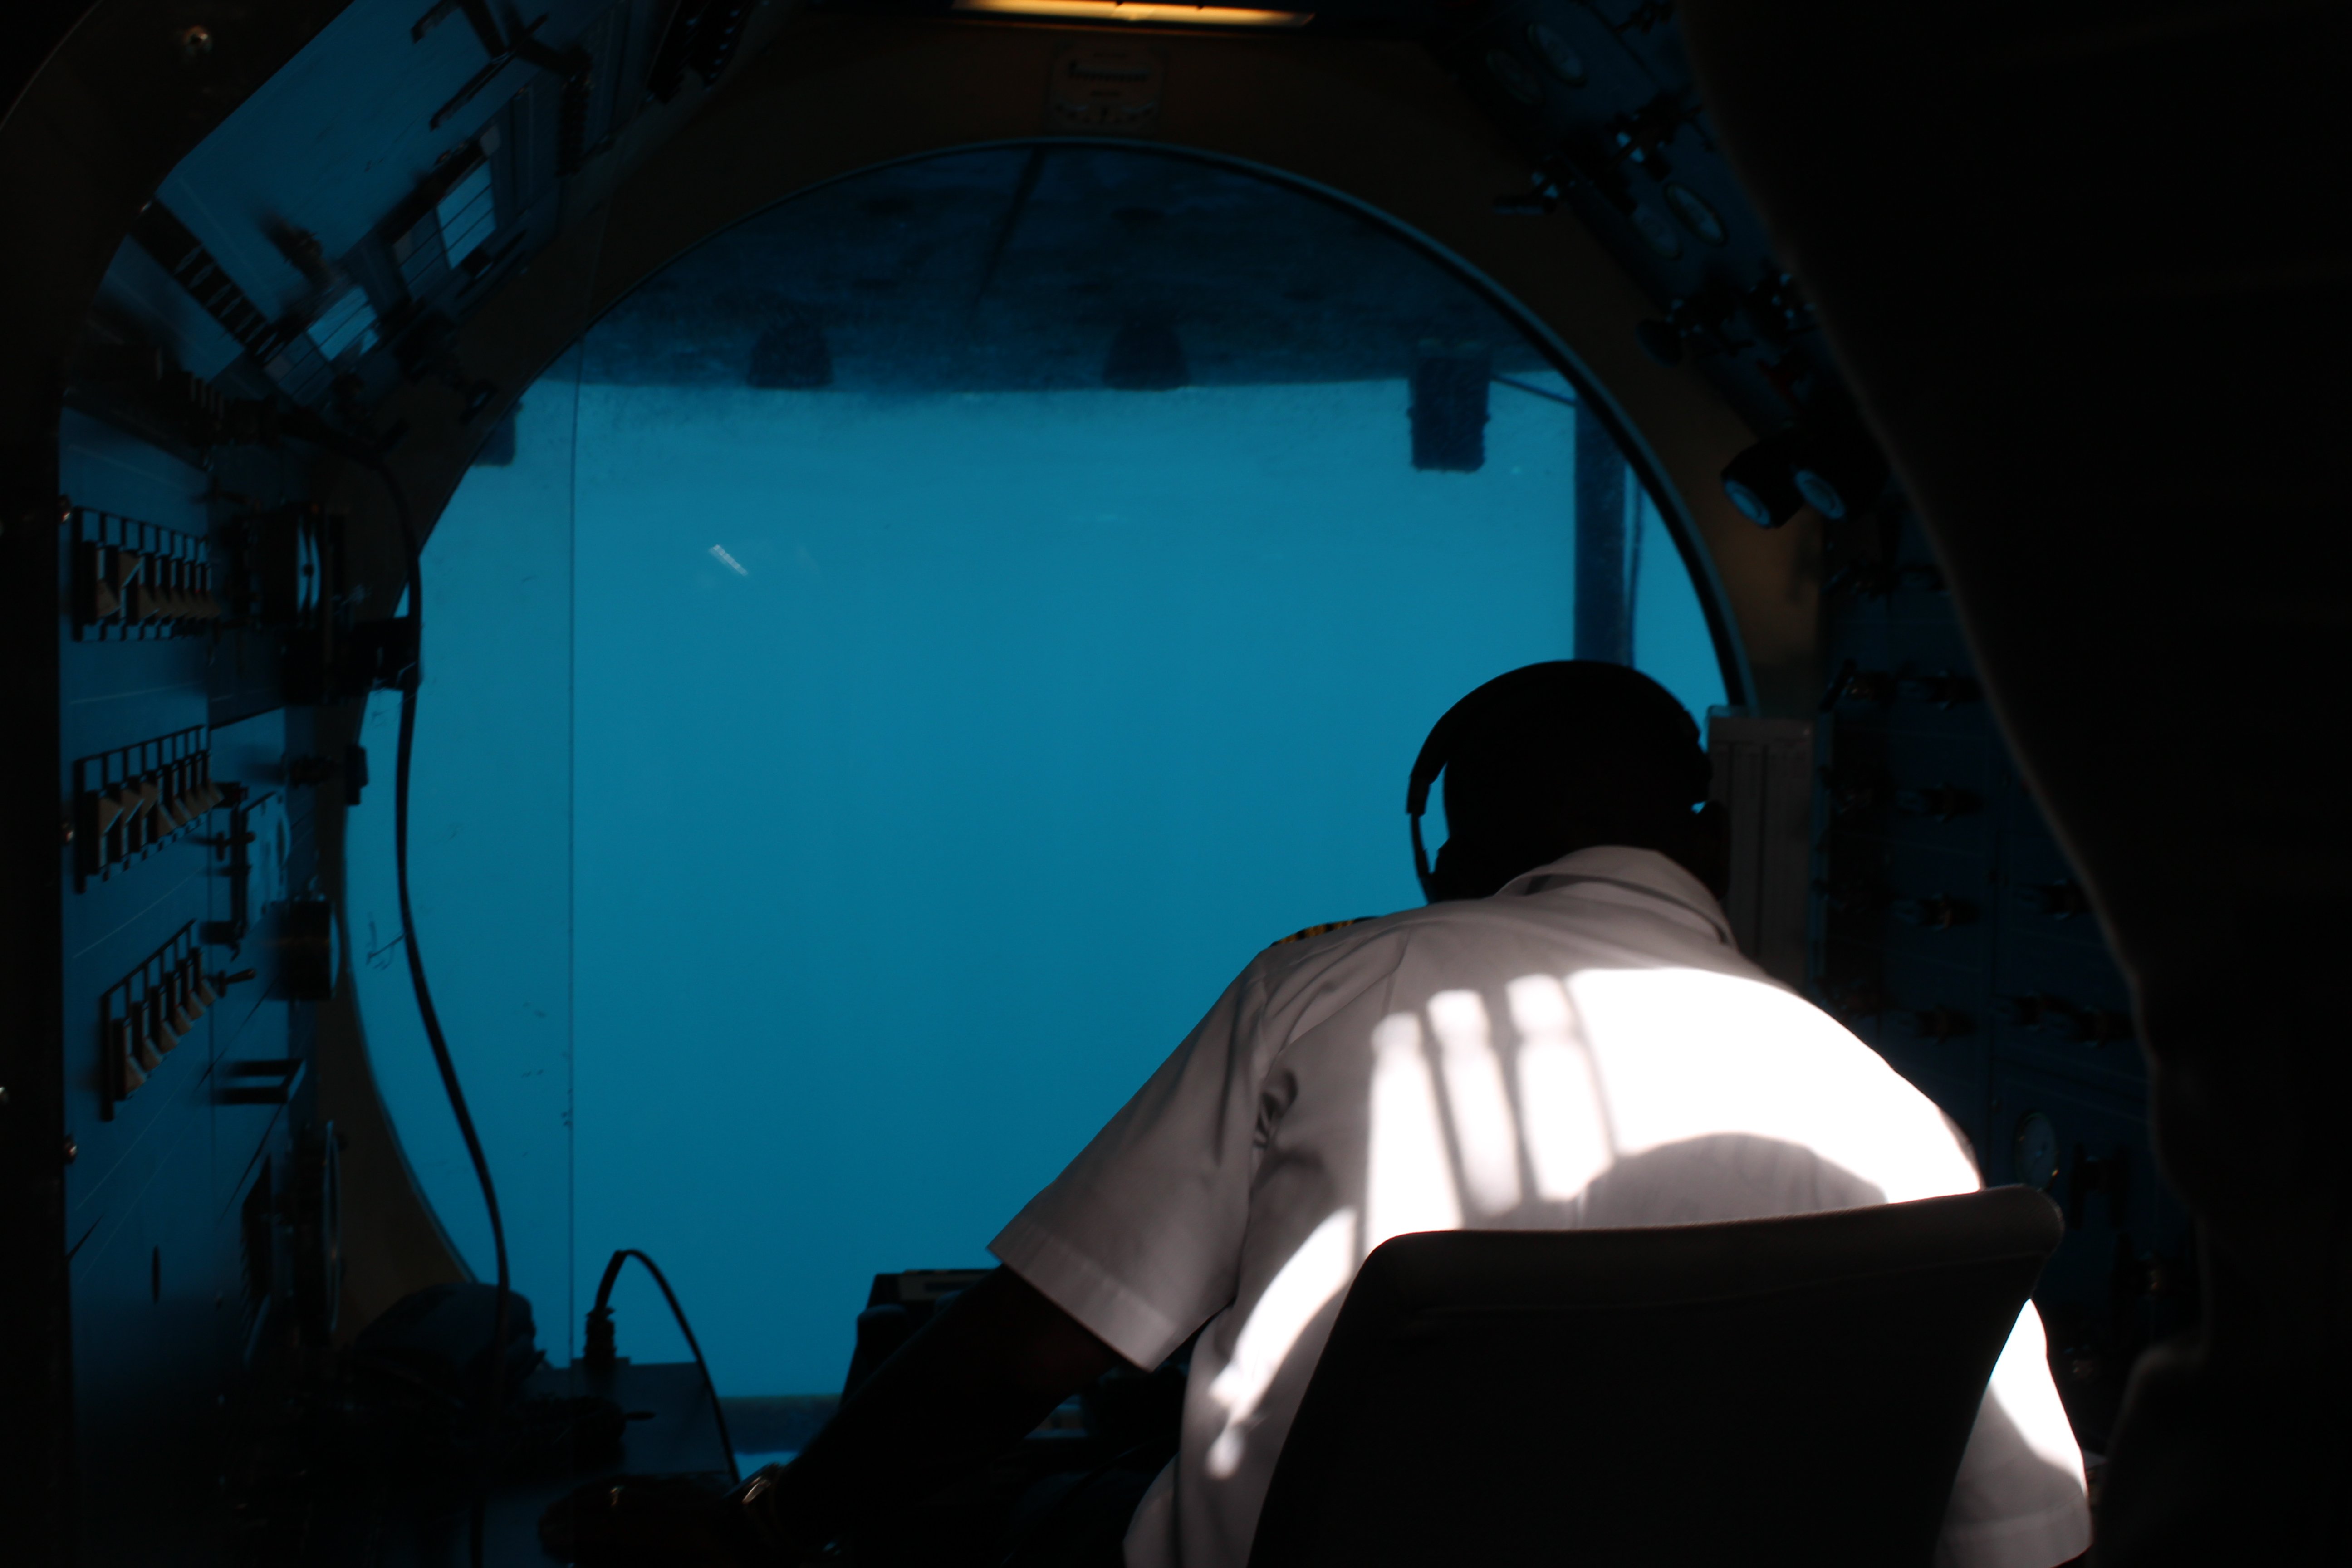 Our pilot onboard Atlantis Submarine Bridgetown Barbados